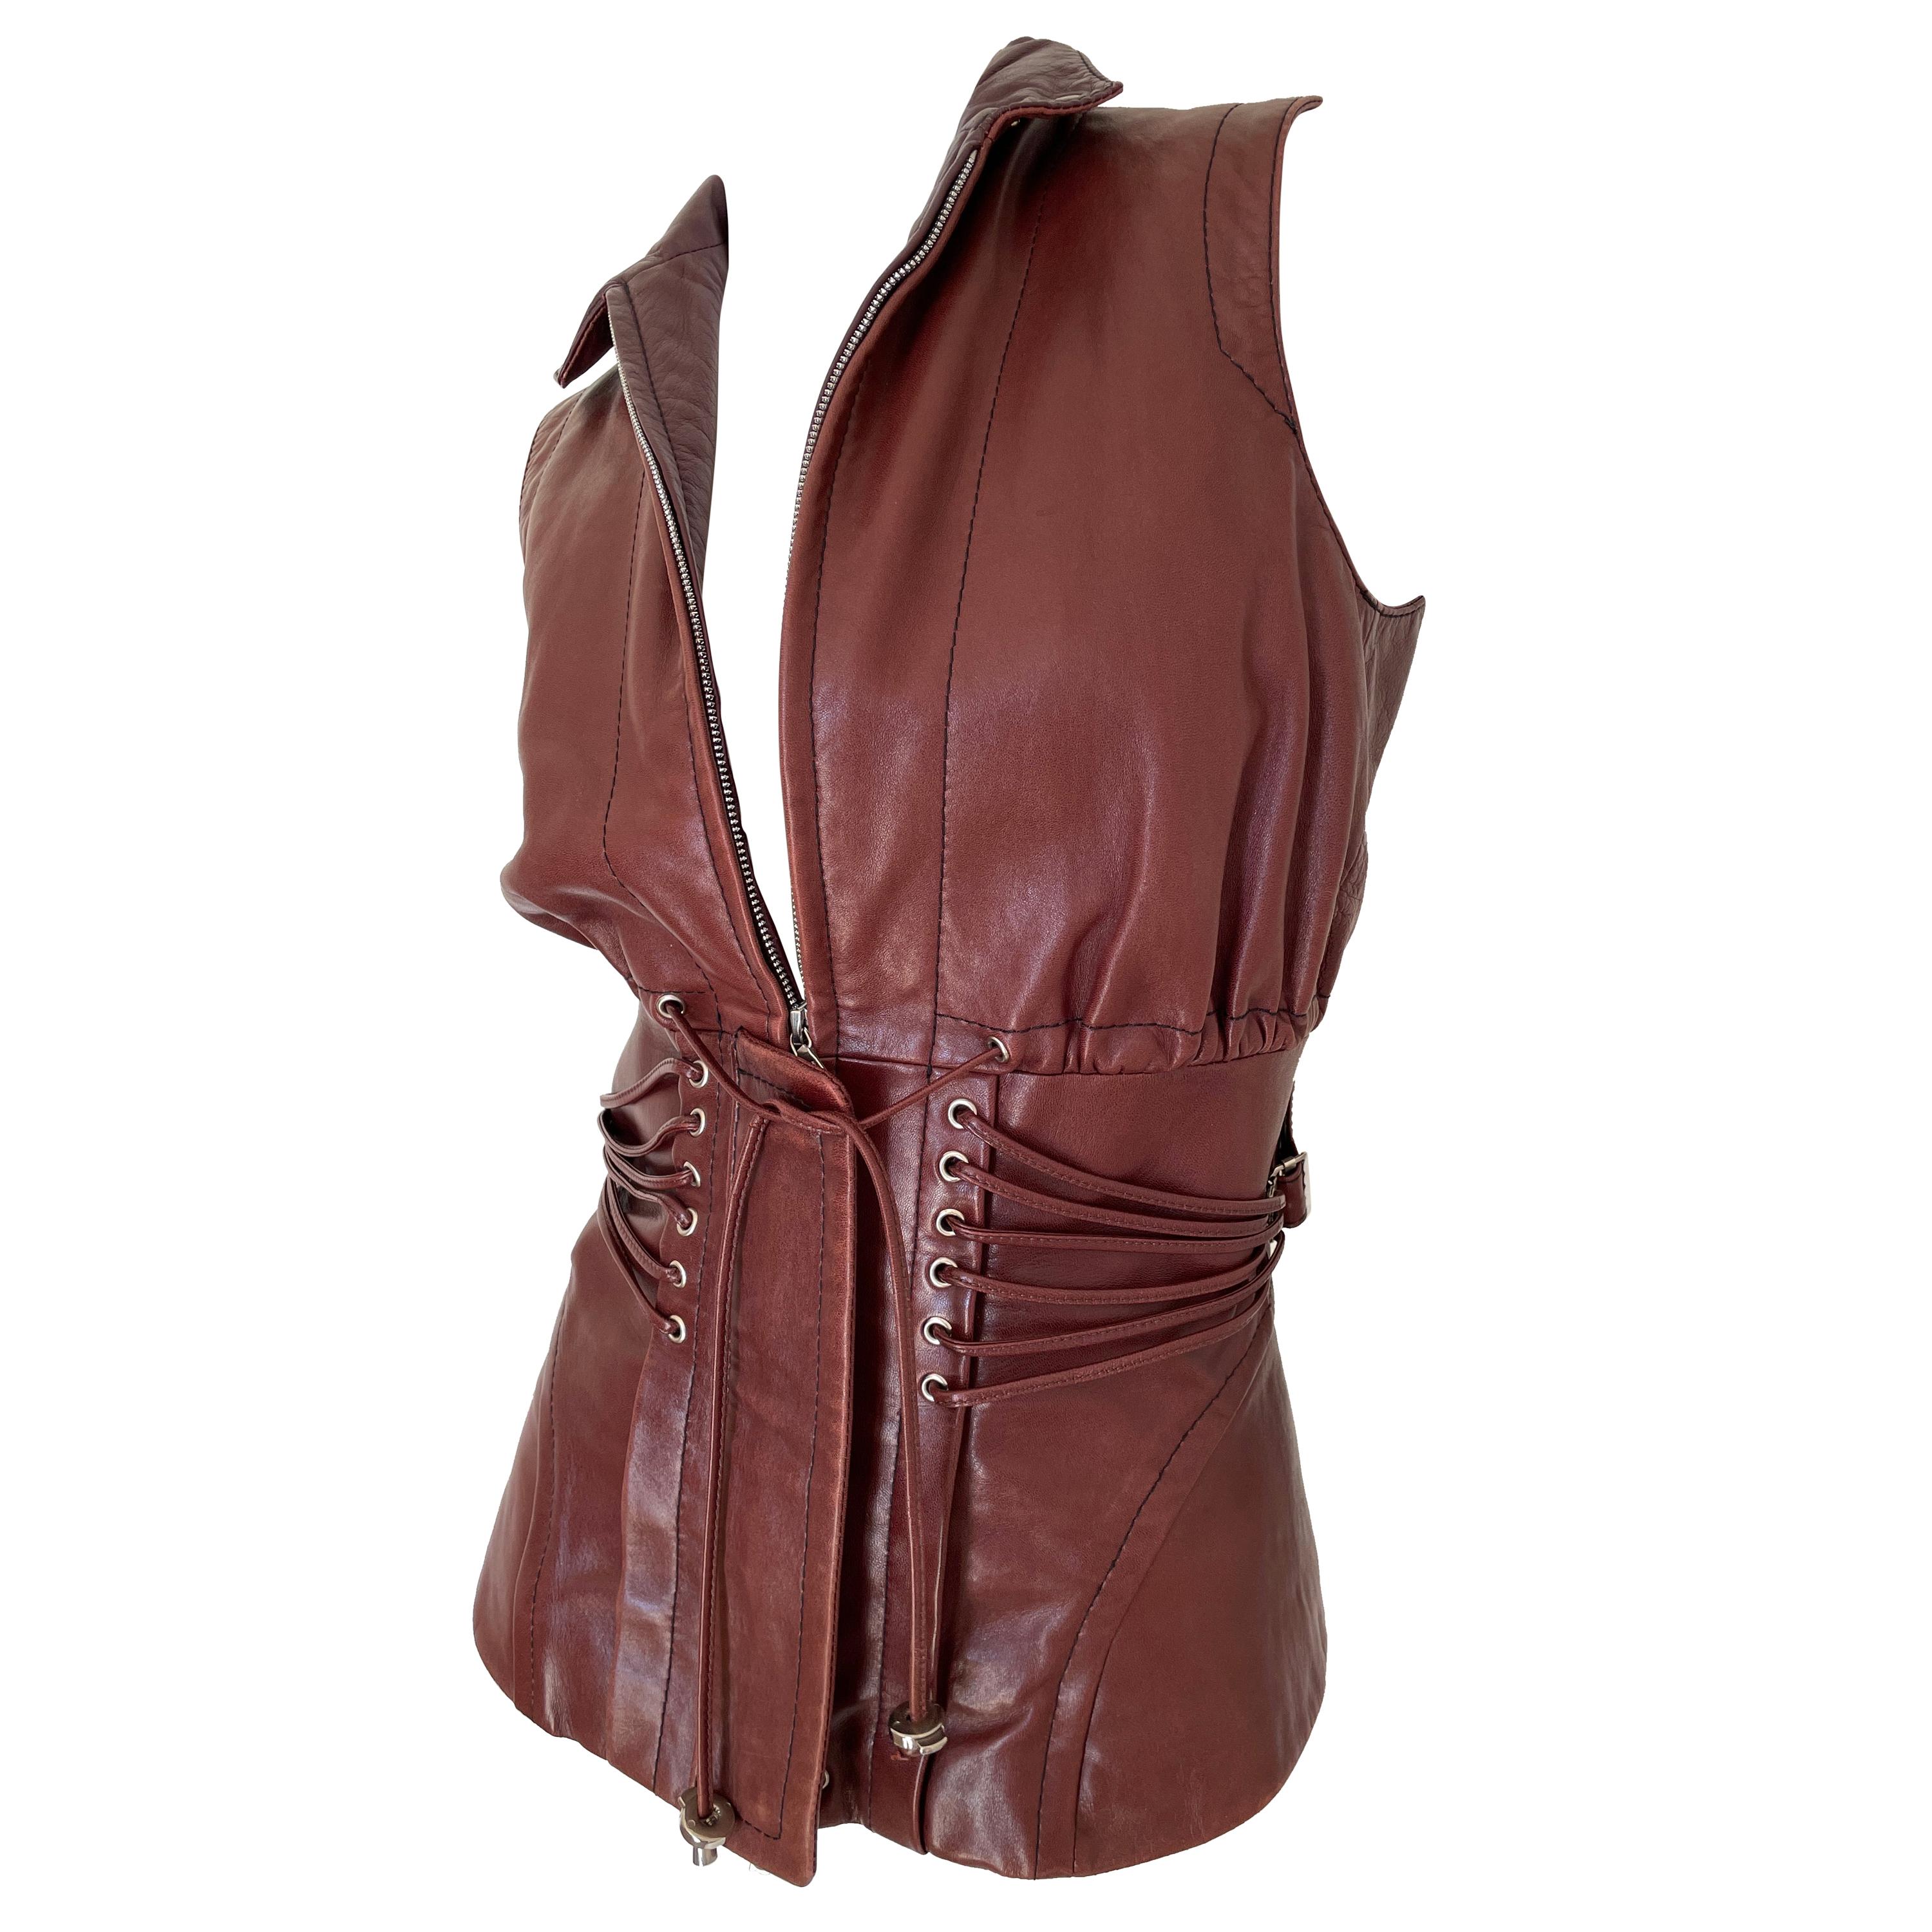  Gianfranco Ferre Vintage Lambskin Leather Moto Vest with Corset Lacing Details For Sale